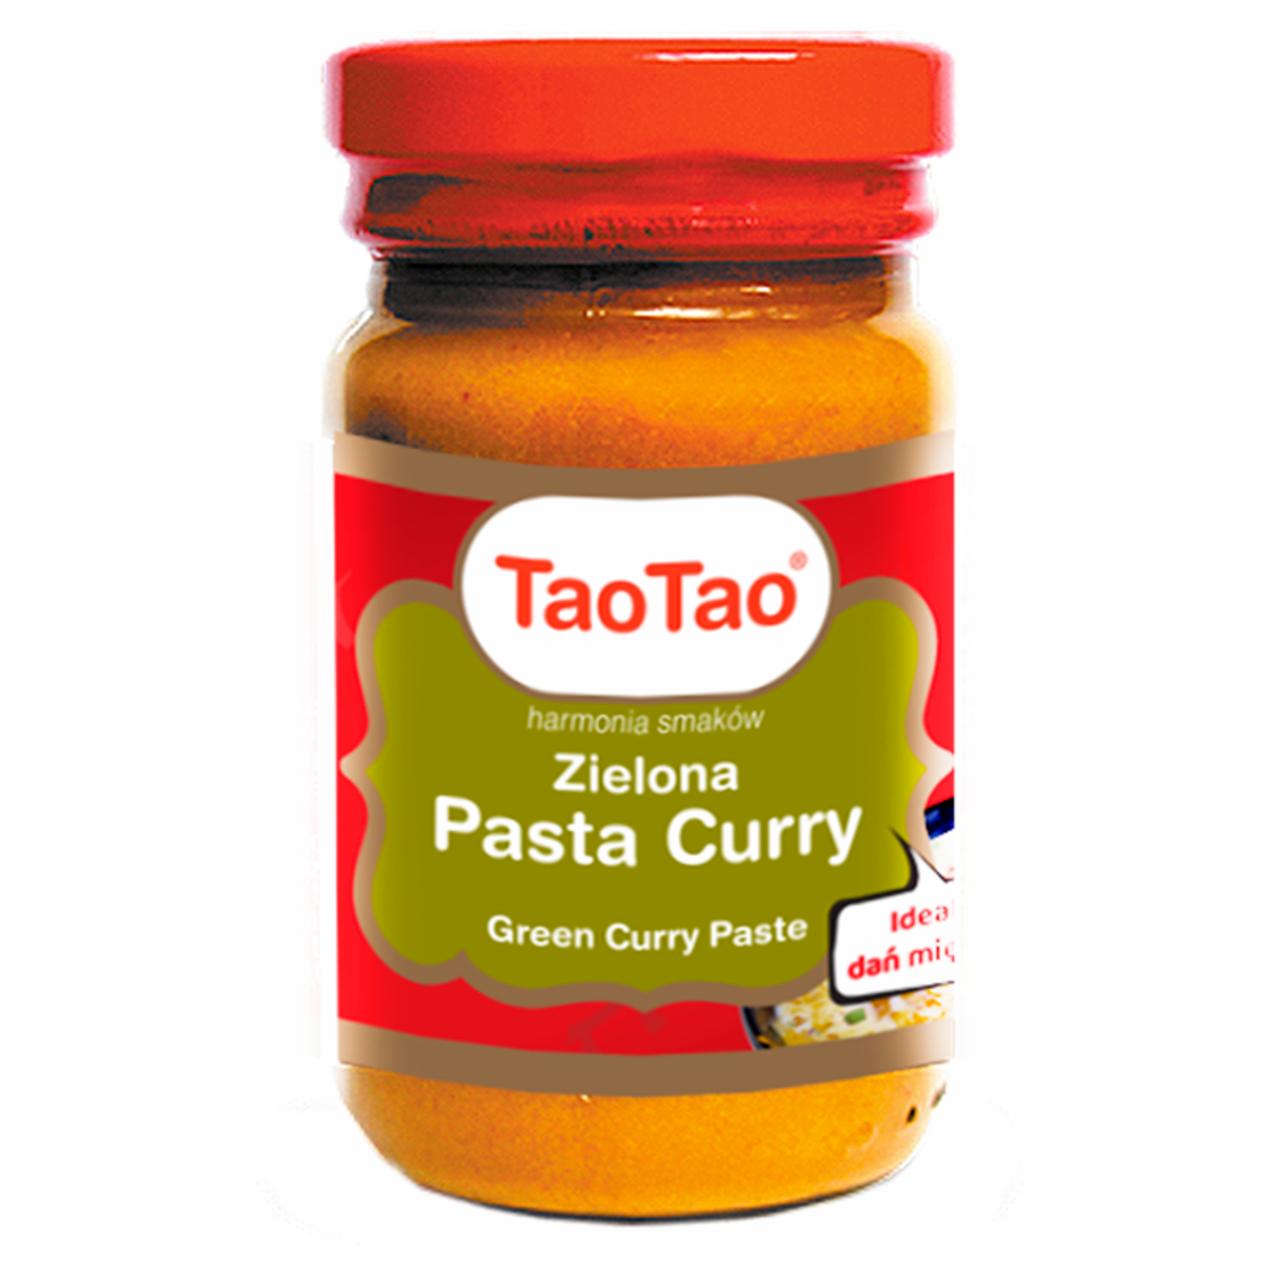 Zdjęcia - Tao Tao Zielona pasta curry 115 g